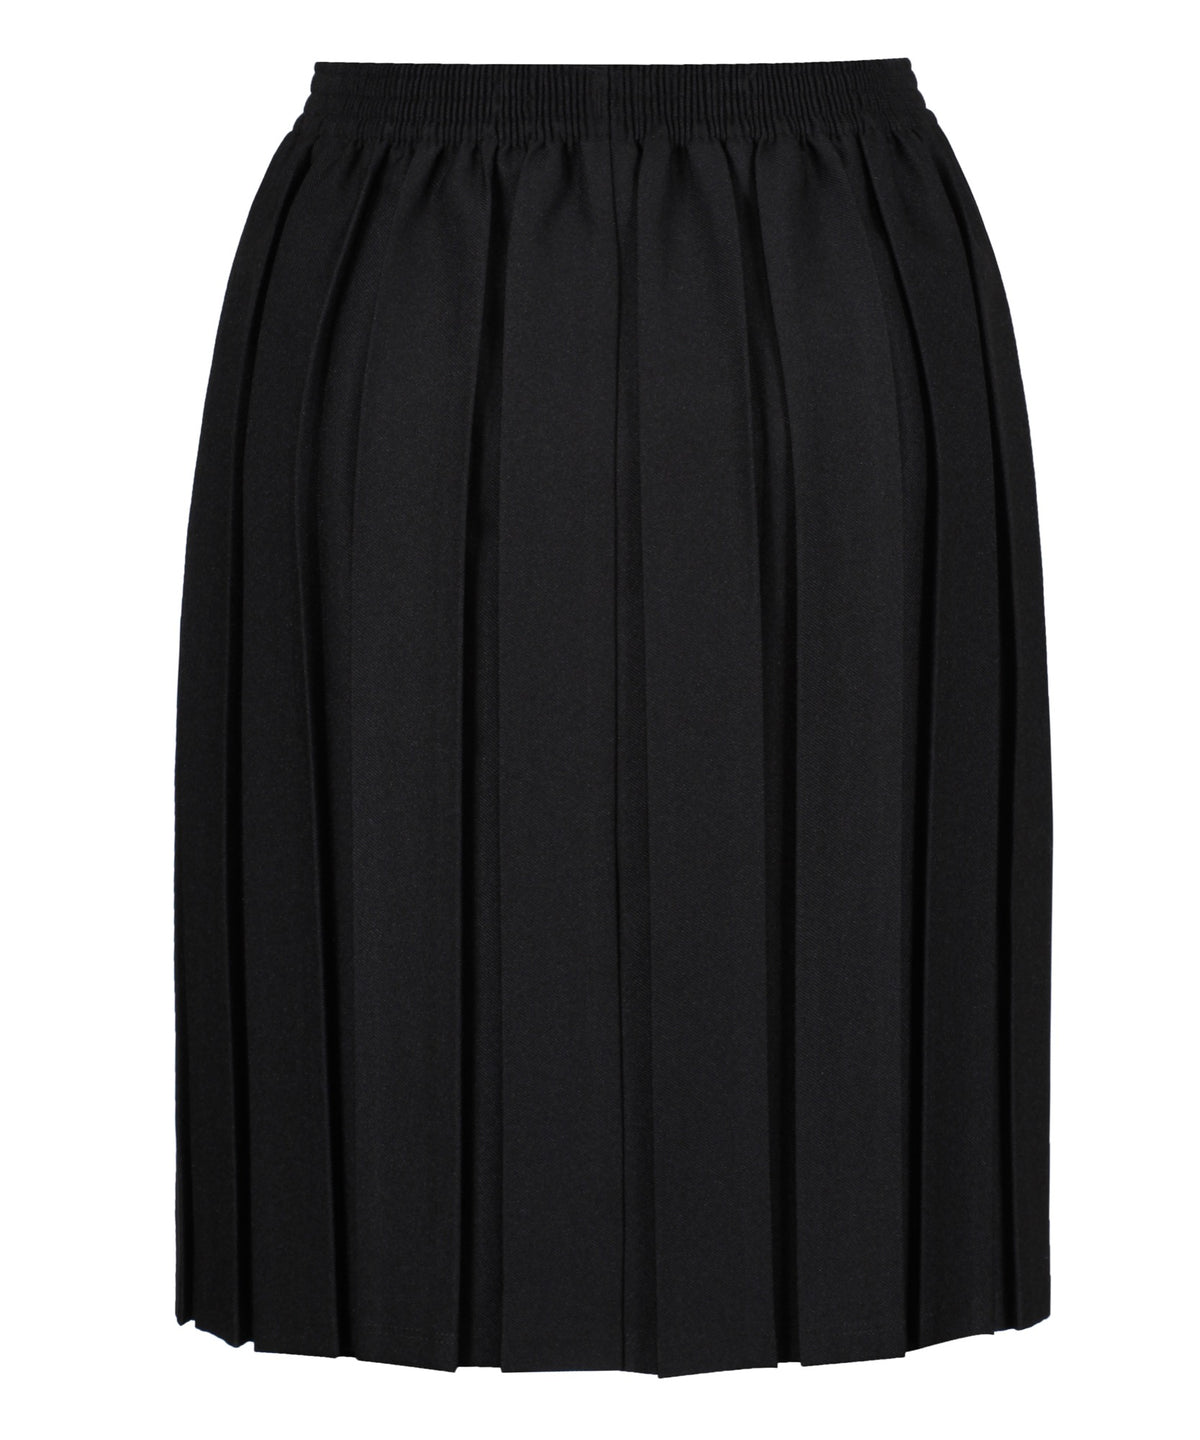 Junior skirt box pleat heavyweight polyester Black/3-4 – Winterbottom's ...